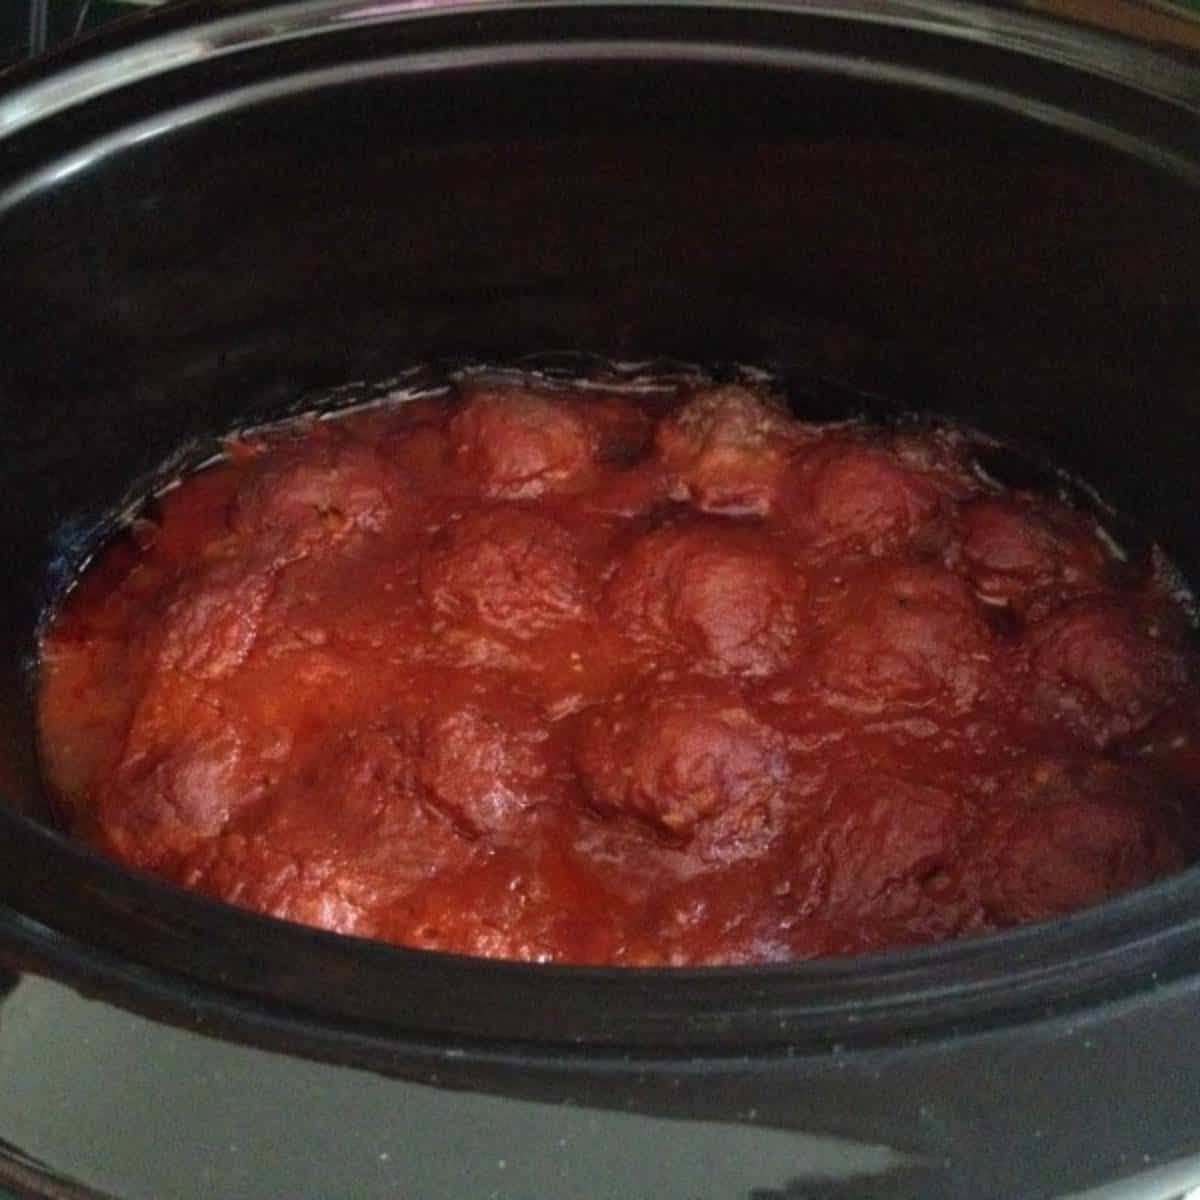 slow cooker turkey meatballs